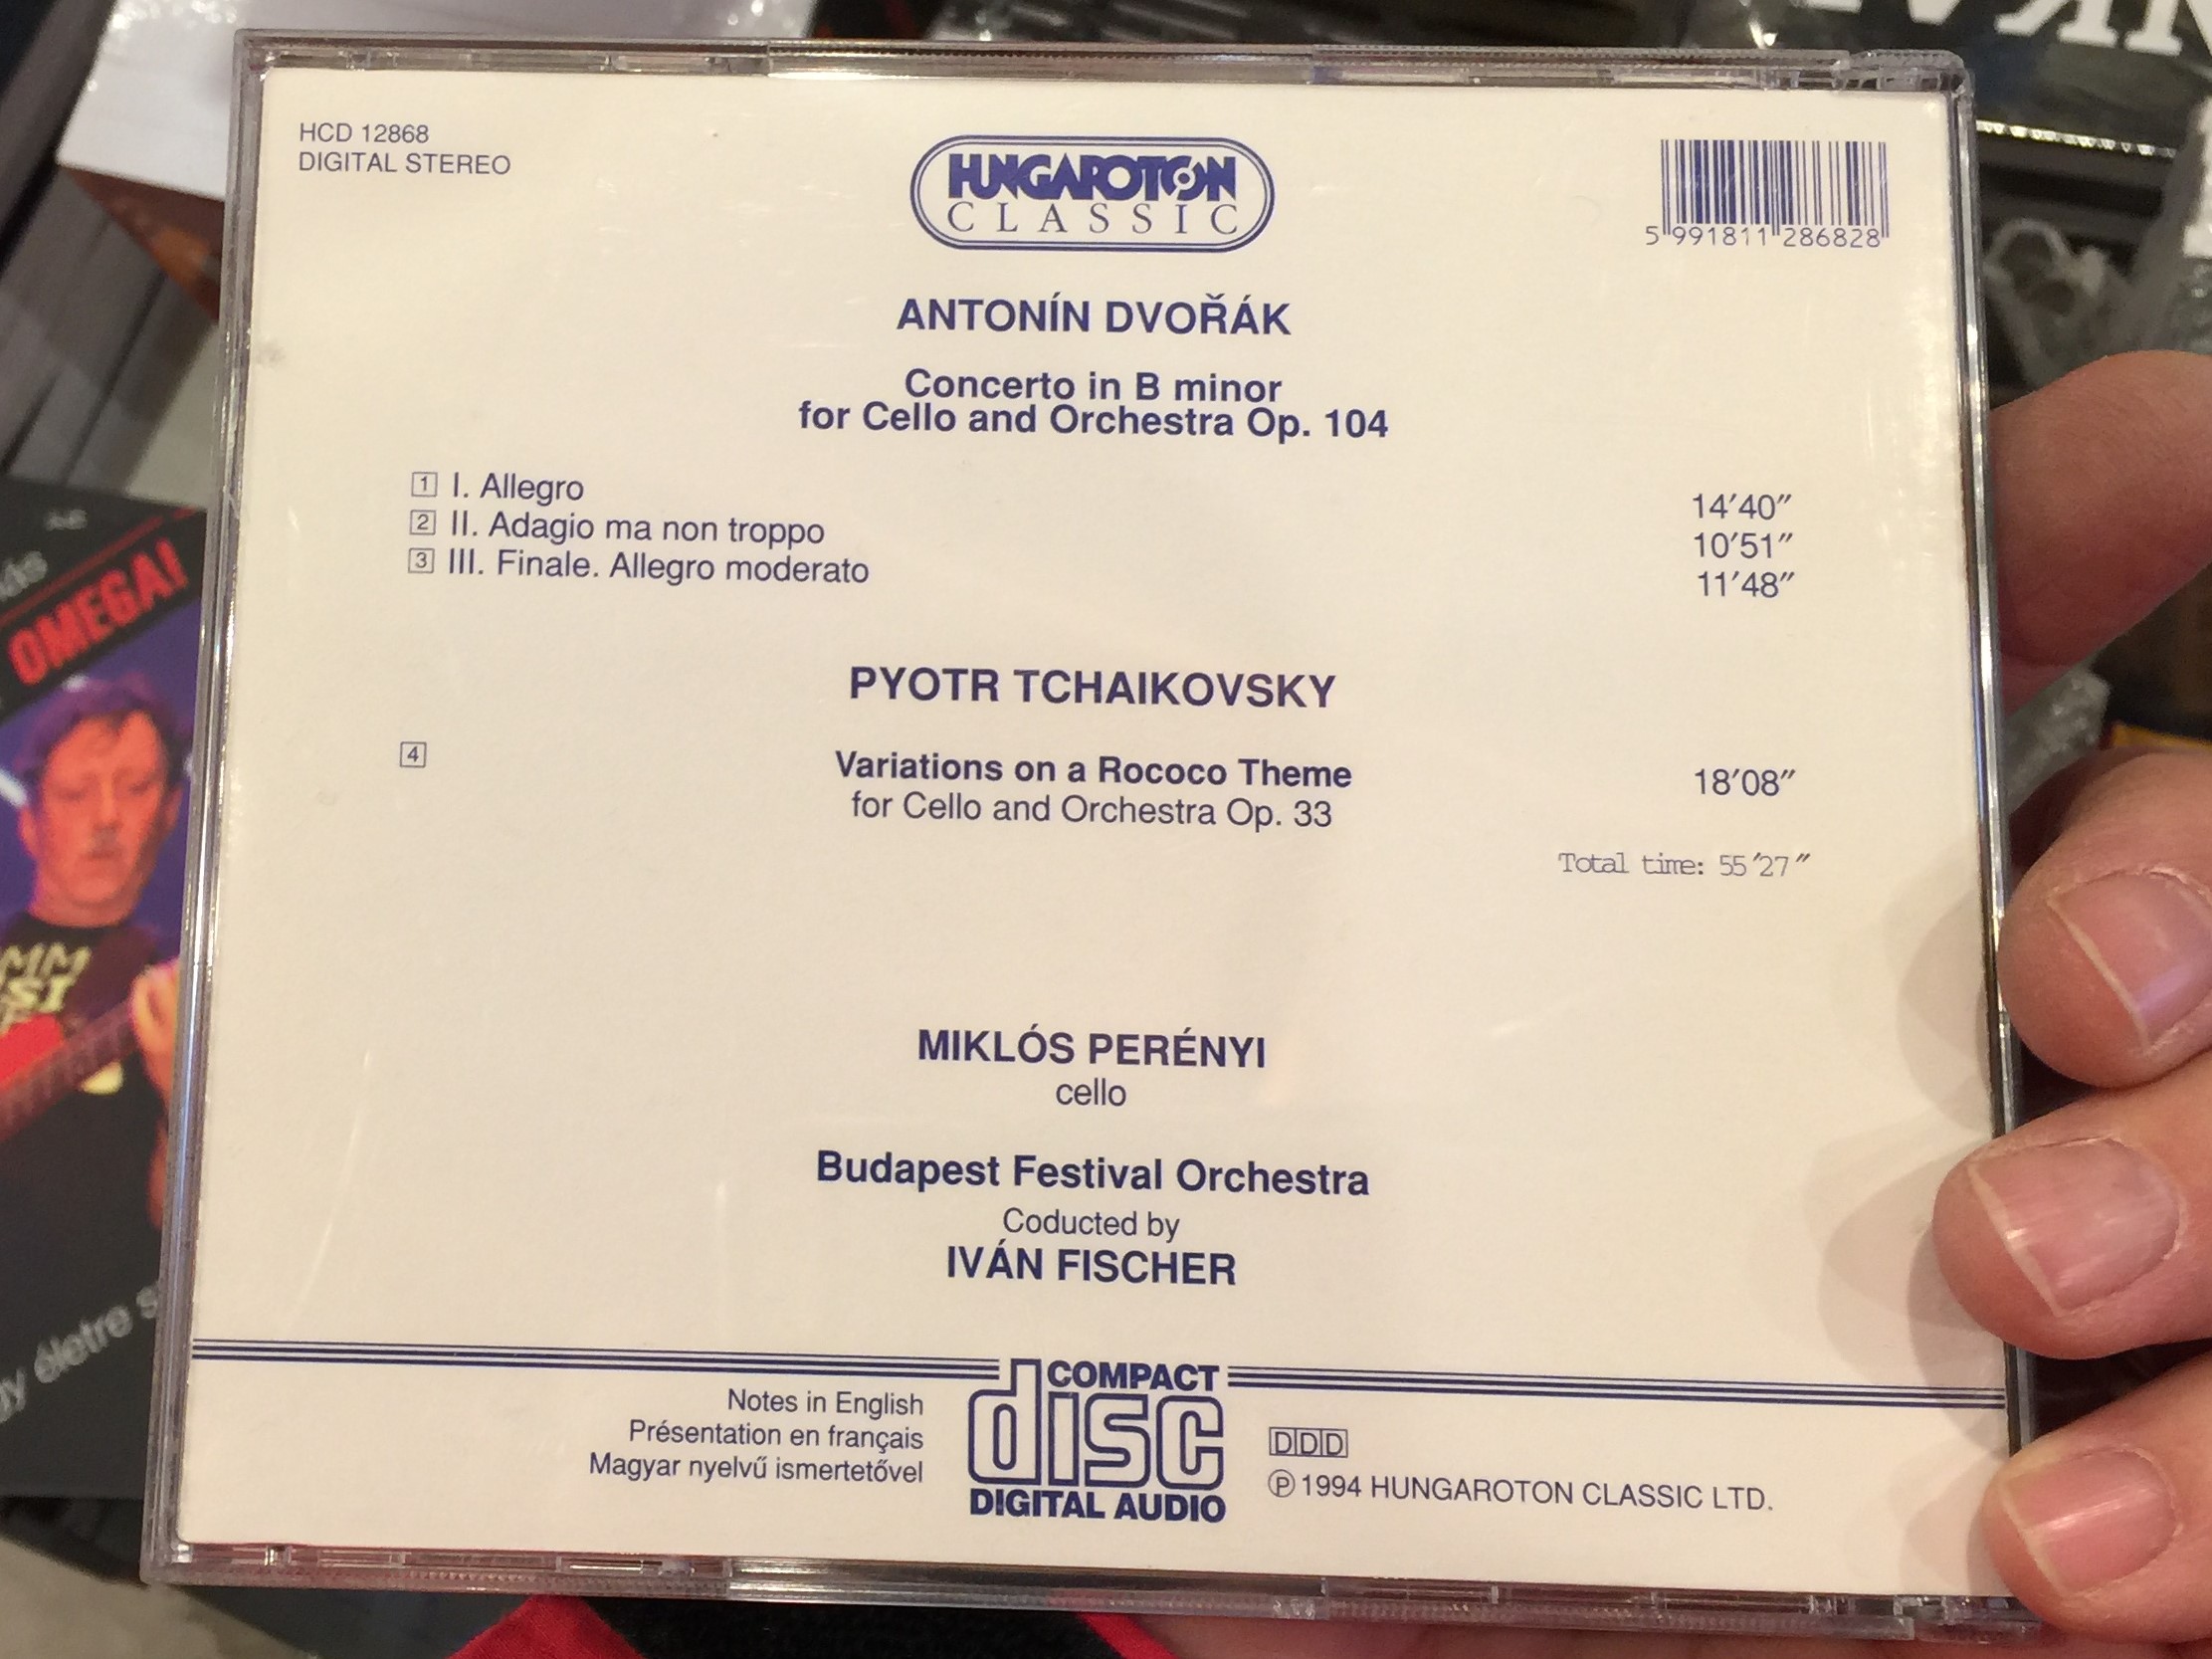 dvo-k-cello-concerto-tchaikovsky-rococo-variations-mikl-s-per-nyi-budapest-festival-orchestra-iv-n-fischer-hungaroton-classic-audio-cd-1994-stereo-hcd-12868-2-.jpg